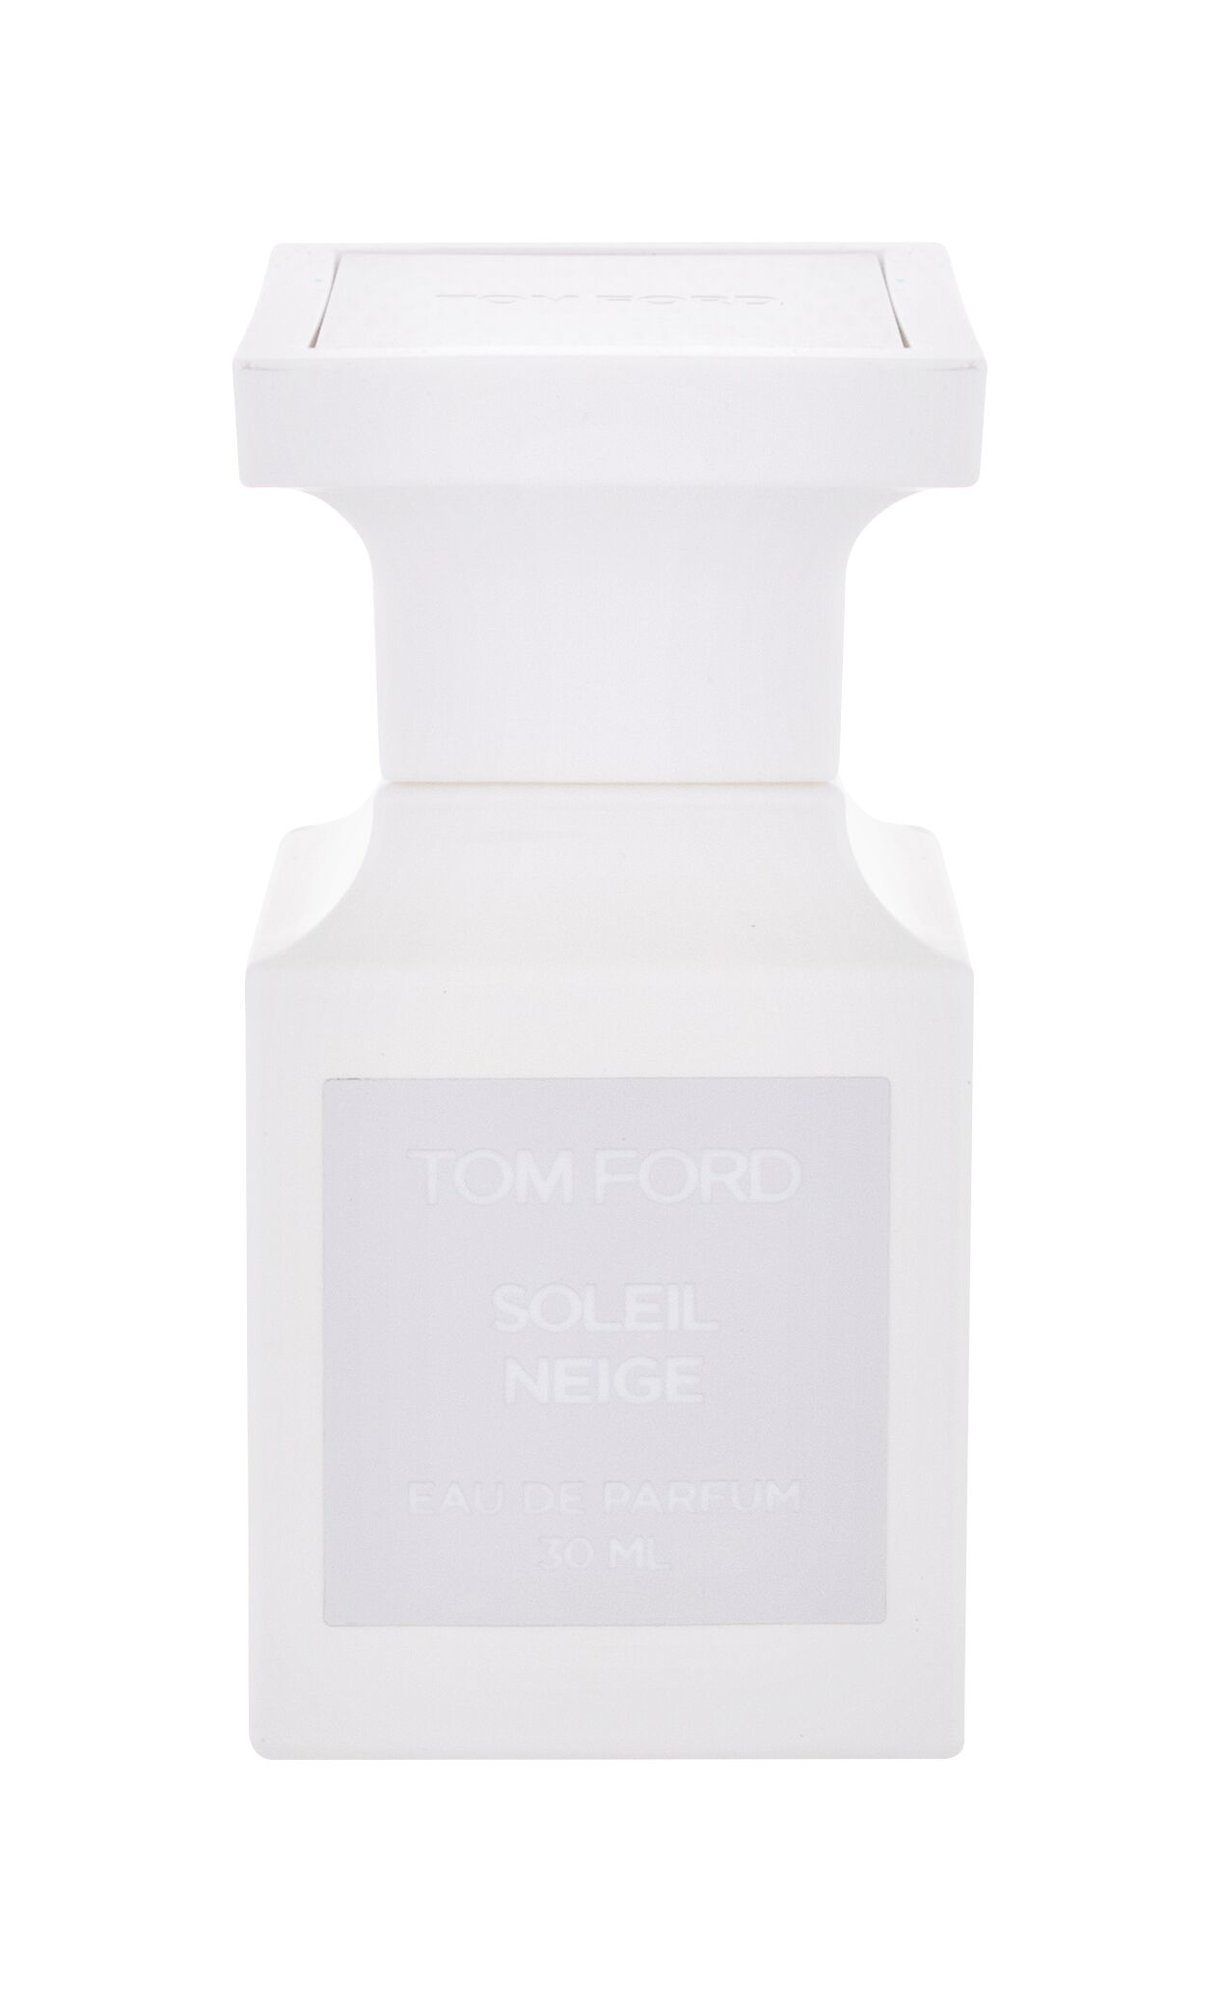 TOM FORD Soleil Neige, Parfumovaná voda 50ml